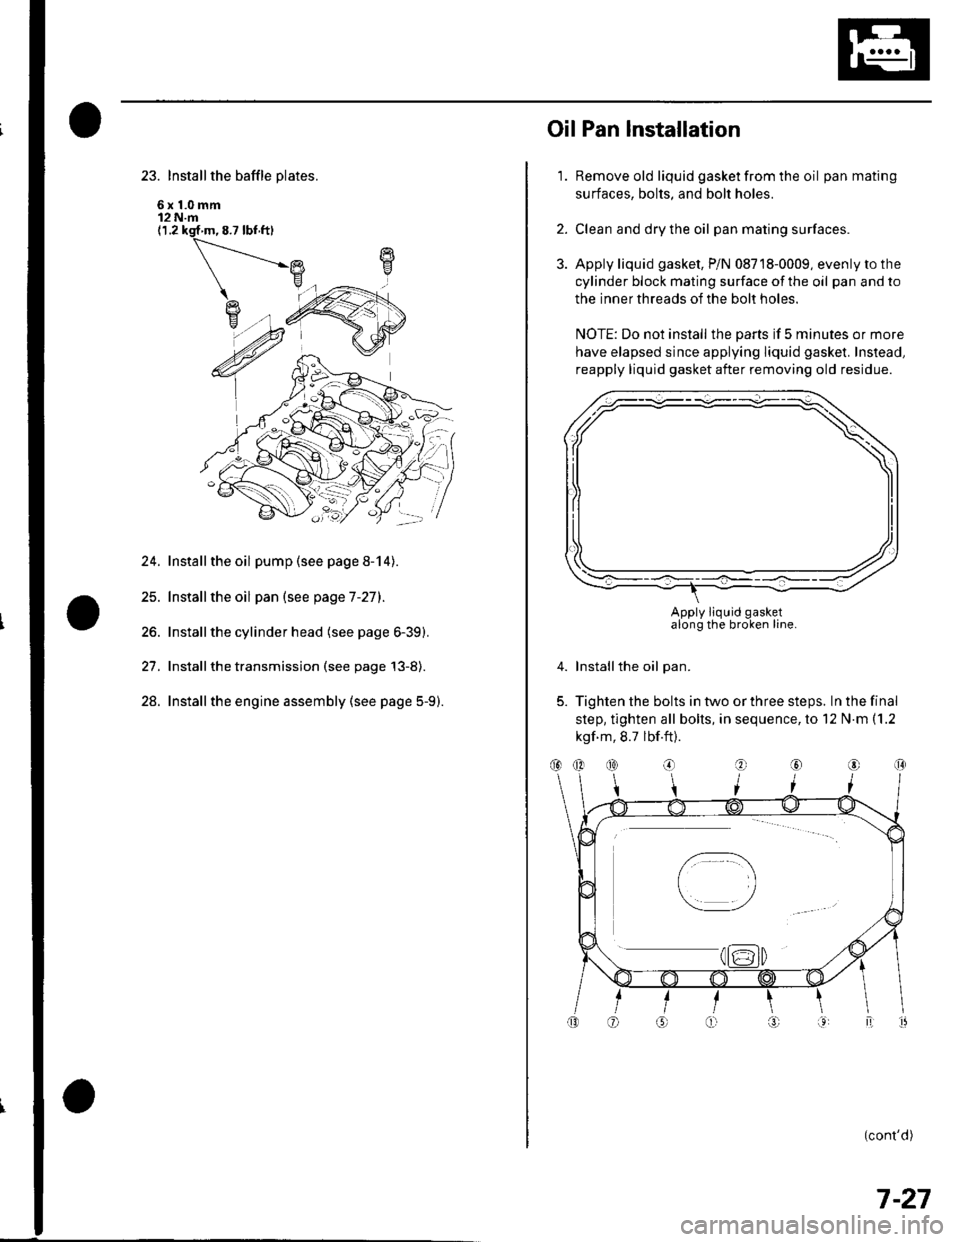 HONDA CIVIC 2003 7.G Workshop Manual 23. Install the baffle plates.
6x1.0mm12 N.m(1.2 ksf m, 8.7 lbf ft)
24. Installthe oil pump (see page 8-14).
25. Installthe oil pan (see page 7-27).
26. Installthe cylinder head (see page 6-39).
27. I